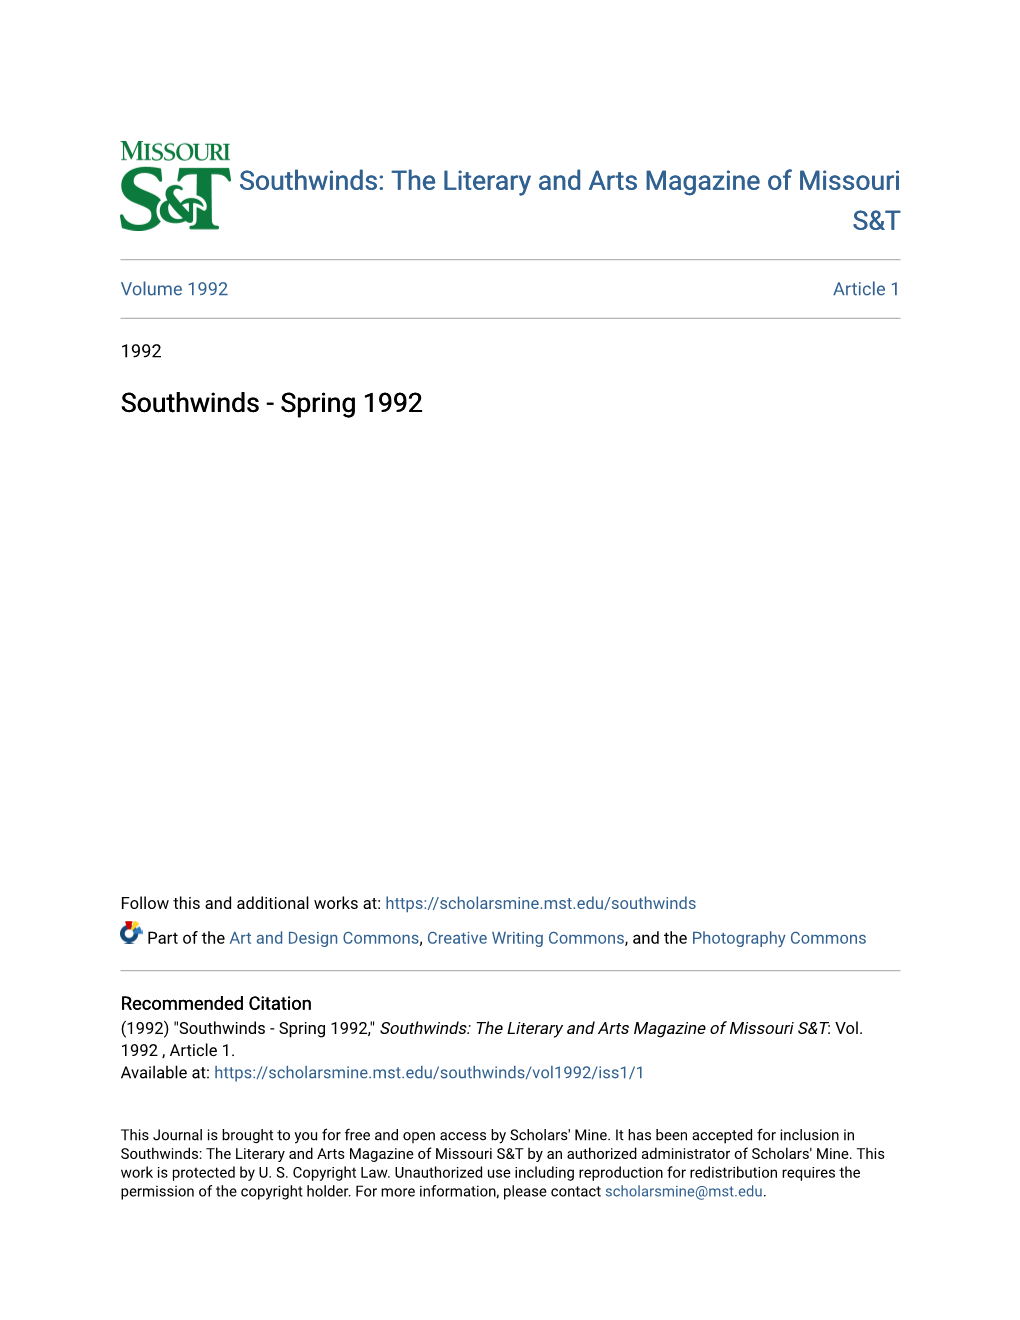 Southwinds: the Literary and Arts Magazine of Missouri S&T